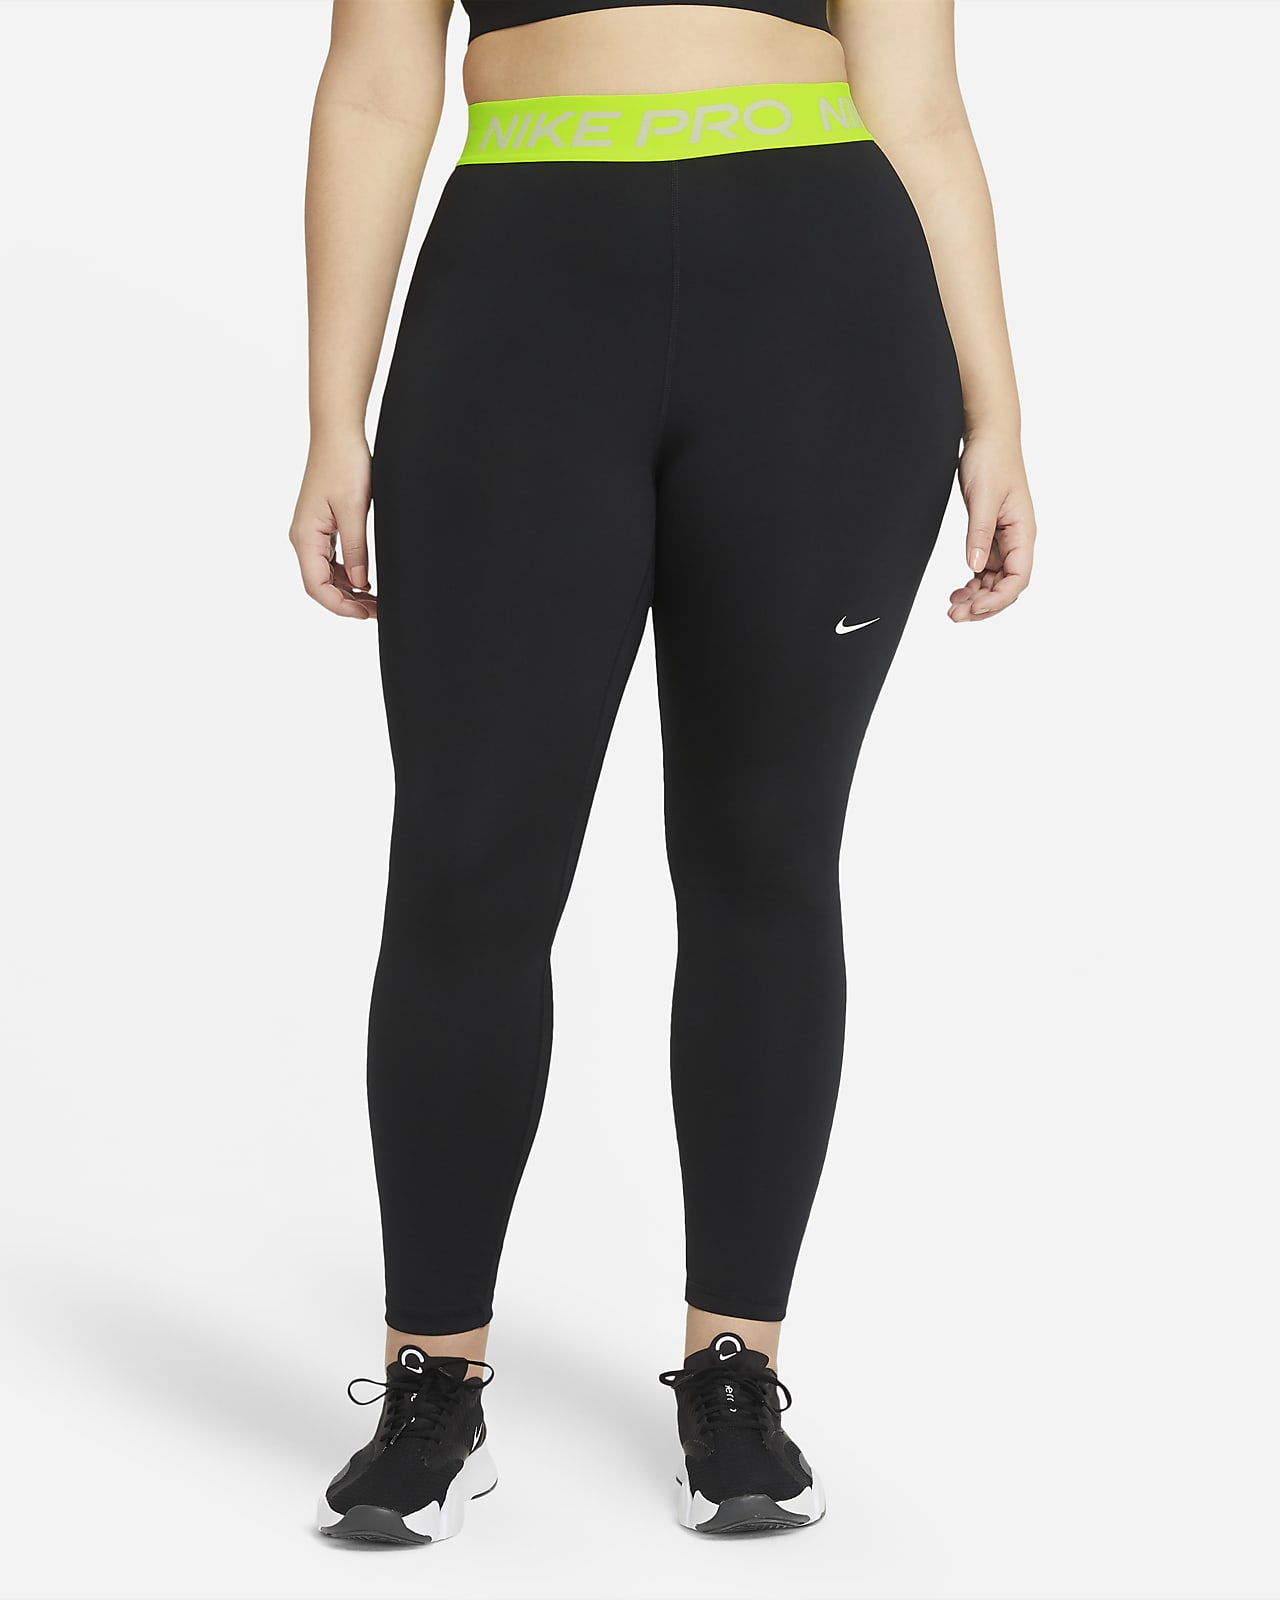 Nike Pro 365 Women's Leggings (Plus 